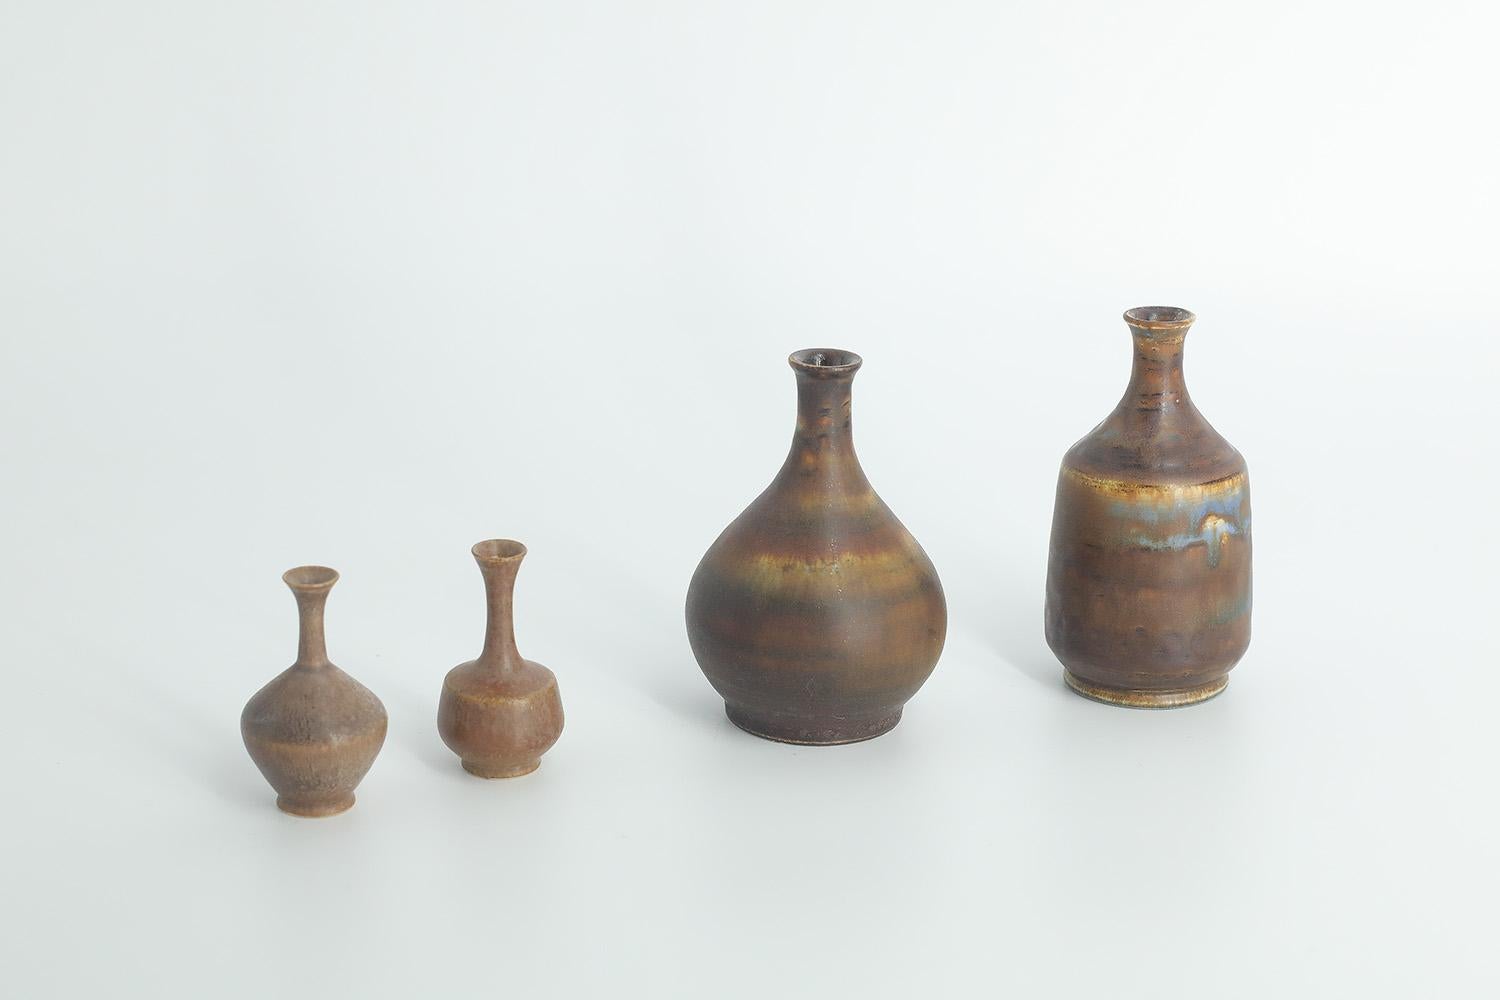  1. Height 8.5 cm | Width 4.5 cm | Depth 4.5 cm
2. Height 8 cm | Width 5 cm | Depth 5 cm
3. Height 5 cm | Width 3 cm | Depth 3 cm
4. Height 5 cm | Width 2.5 cm | Depth 2.5 cm

This set of 4 miniature vases was designed by Gunnar Borg for the Swedish